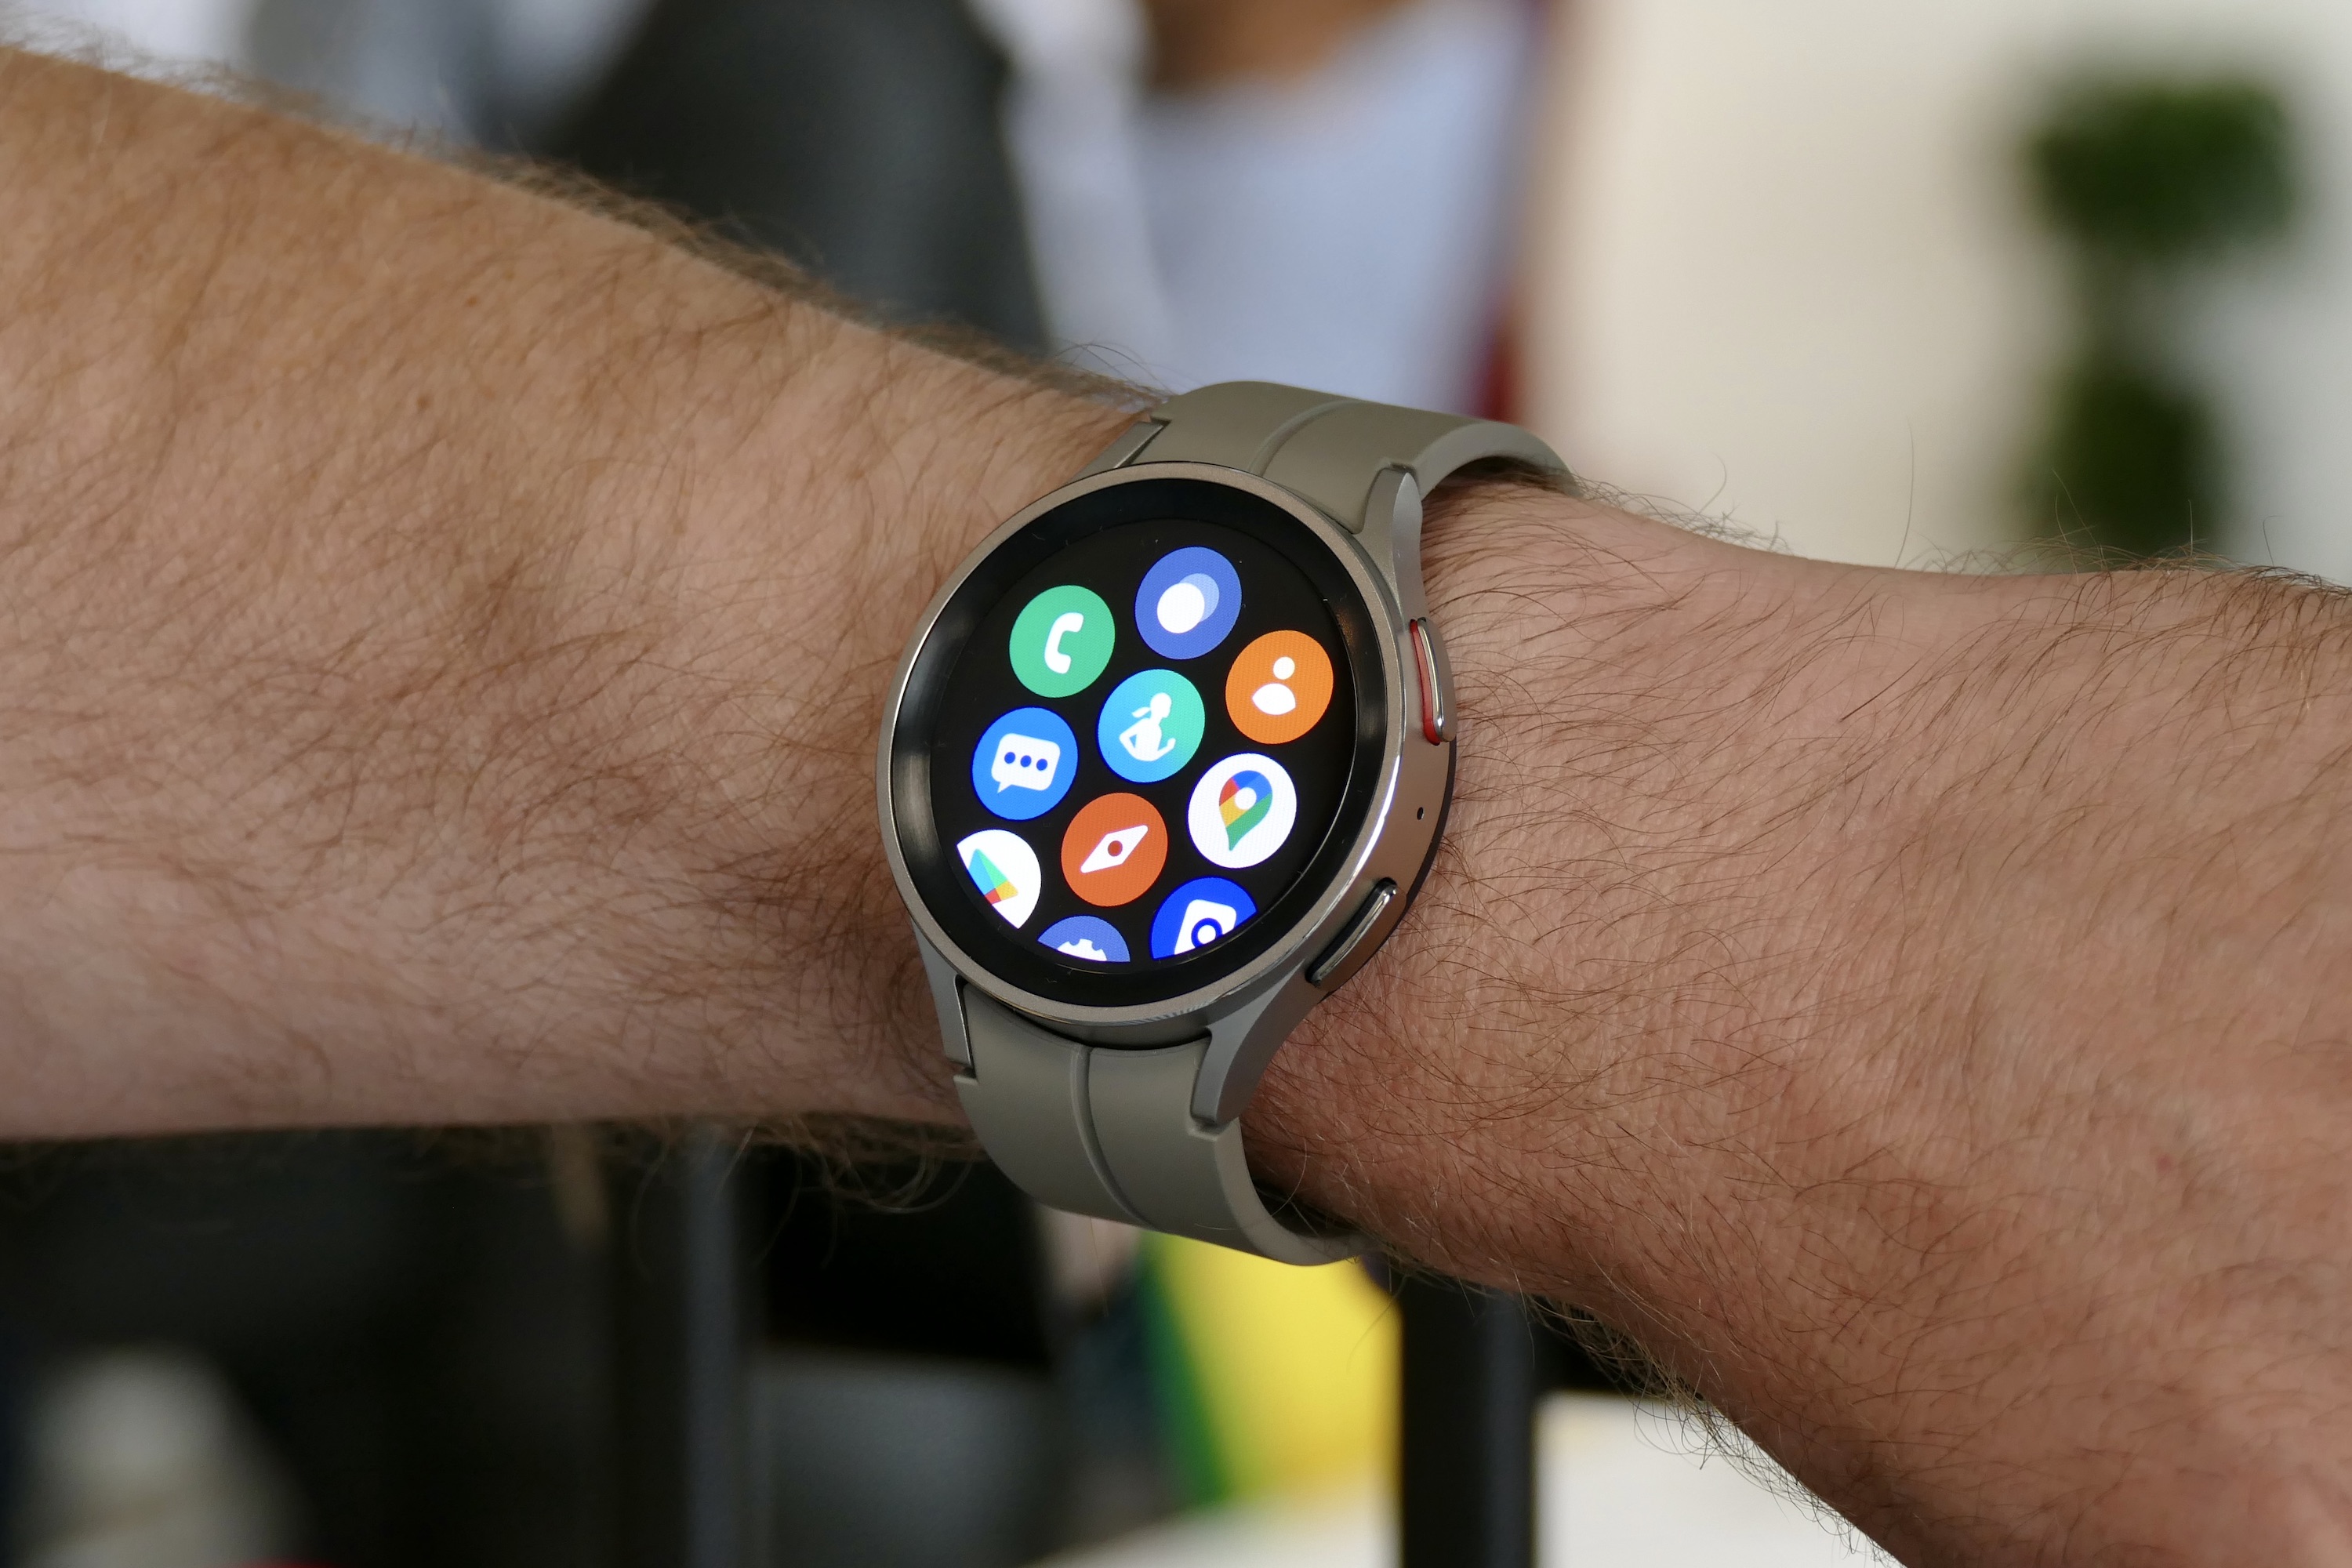 Samsung Smart Watches - All Watches